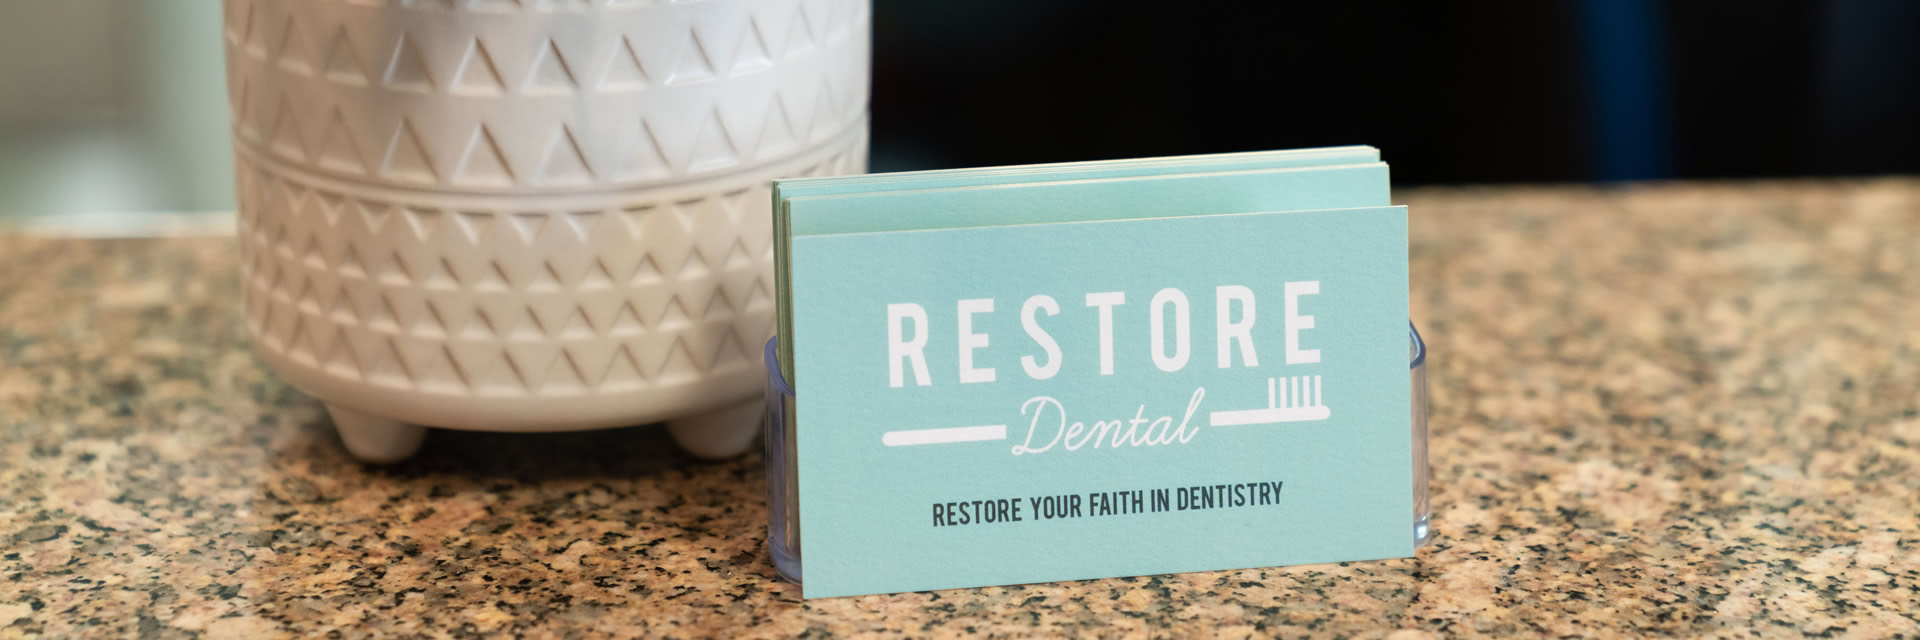 Restore Dental business card